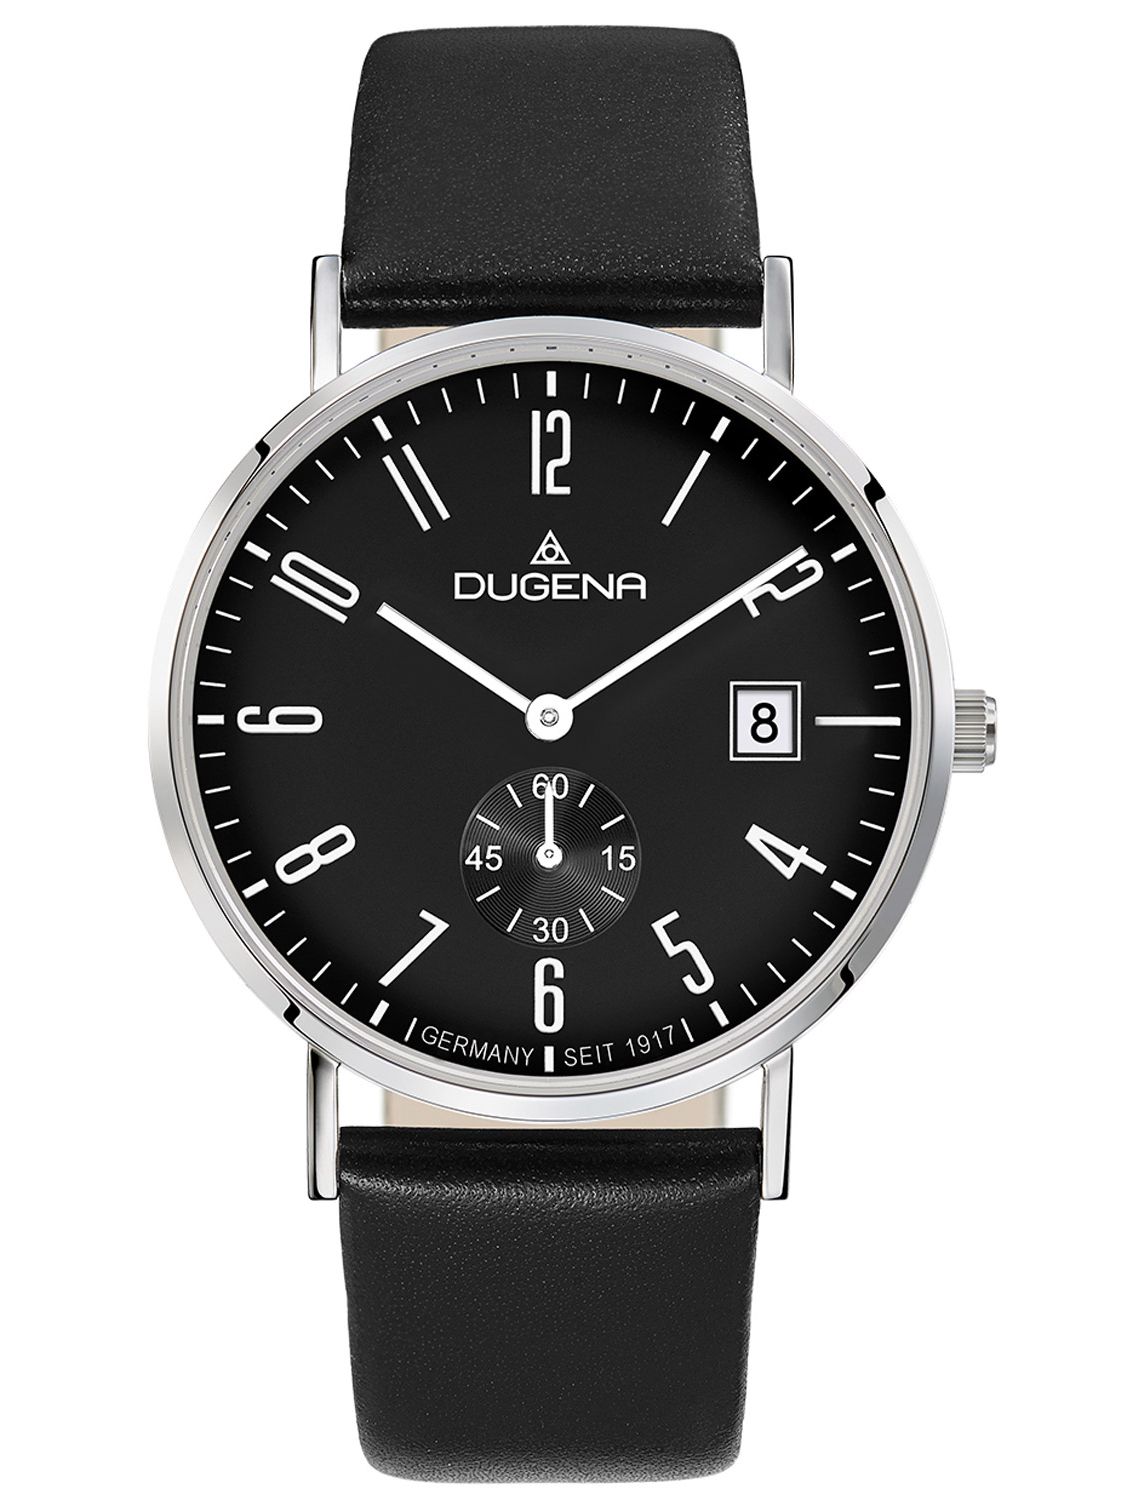 Dugena Men\'s Quartz Watch Mondo Leather Strap uhrcenter • 4460666-1 Black